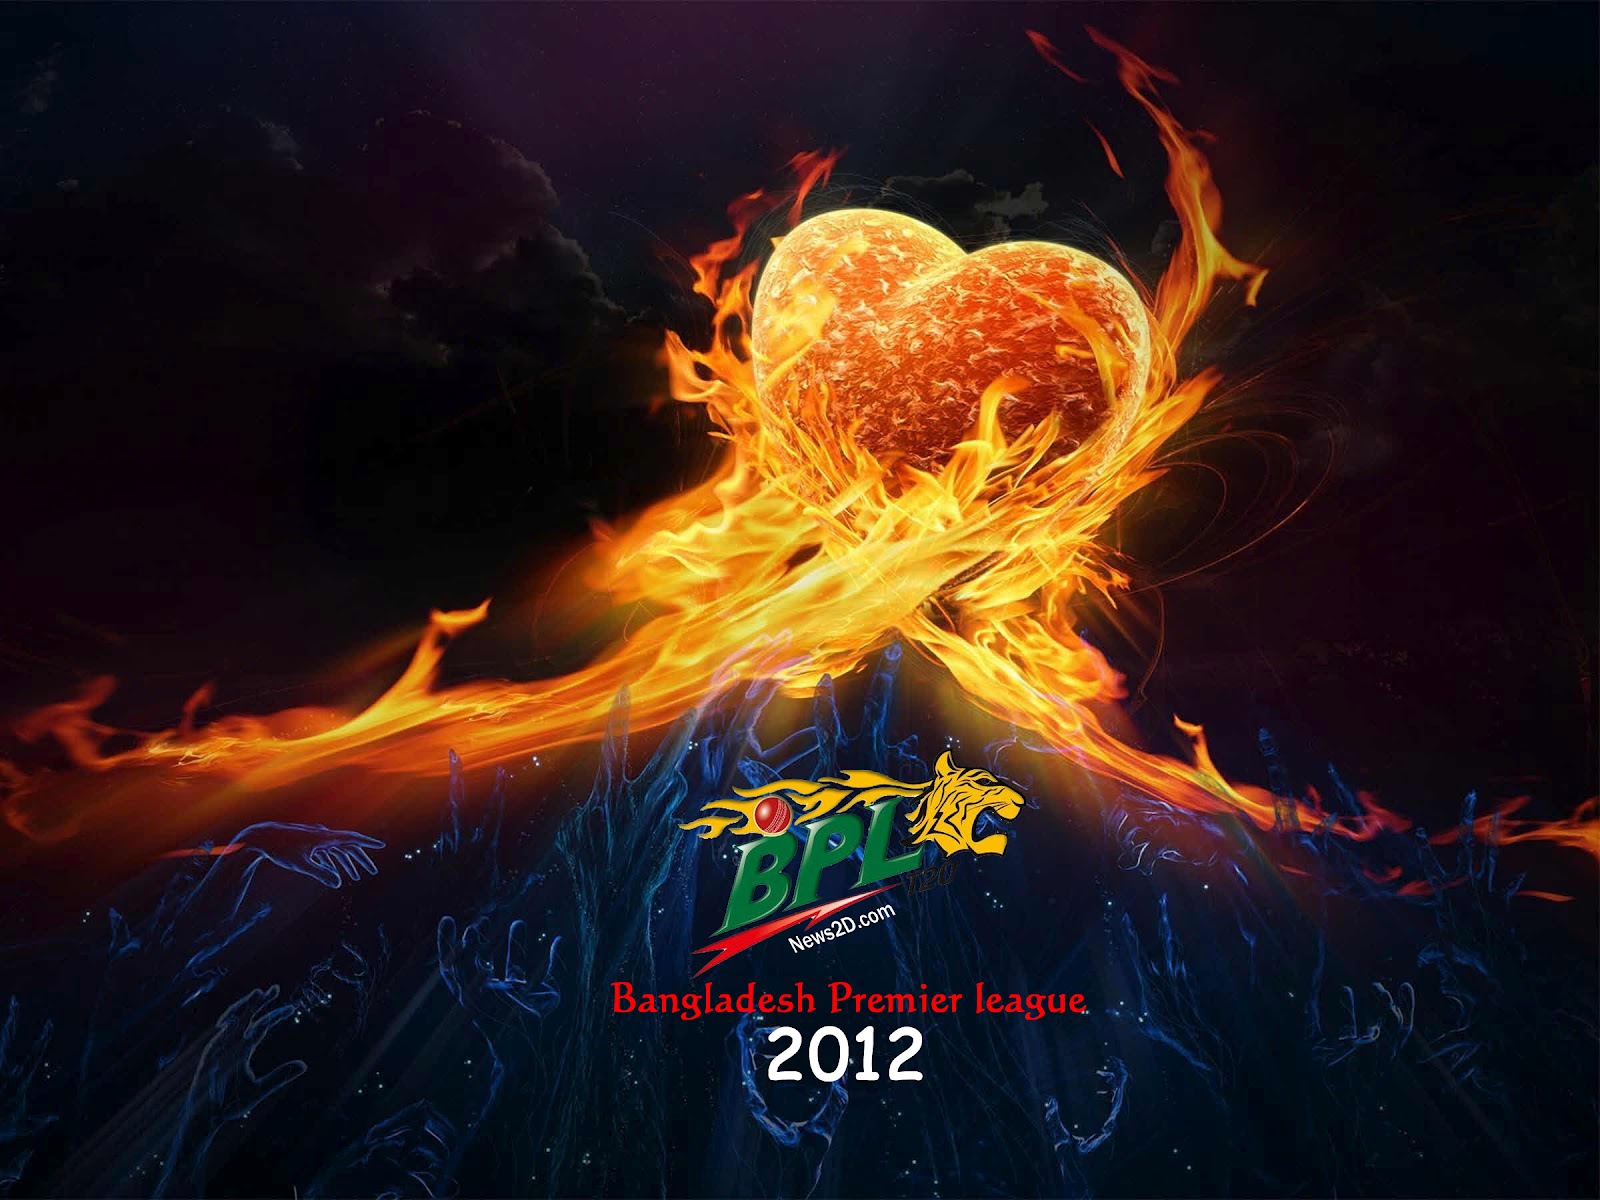 Bangladesh Premier League Bpl T20 Wallpaper Jpg